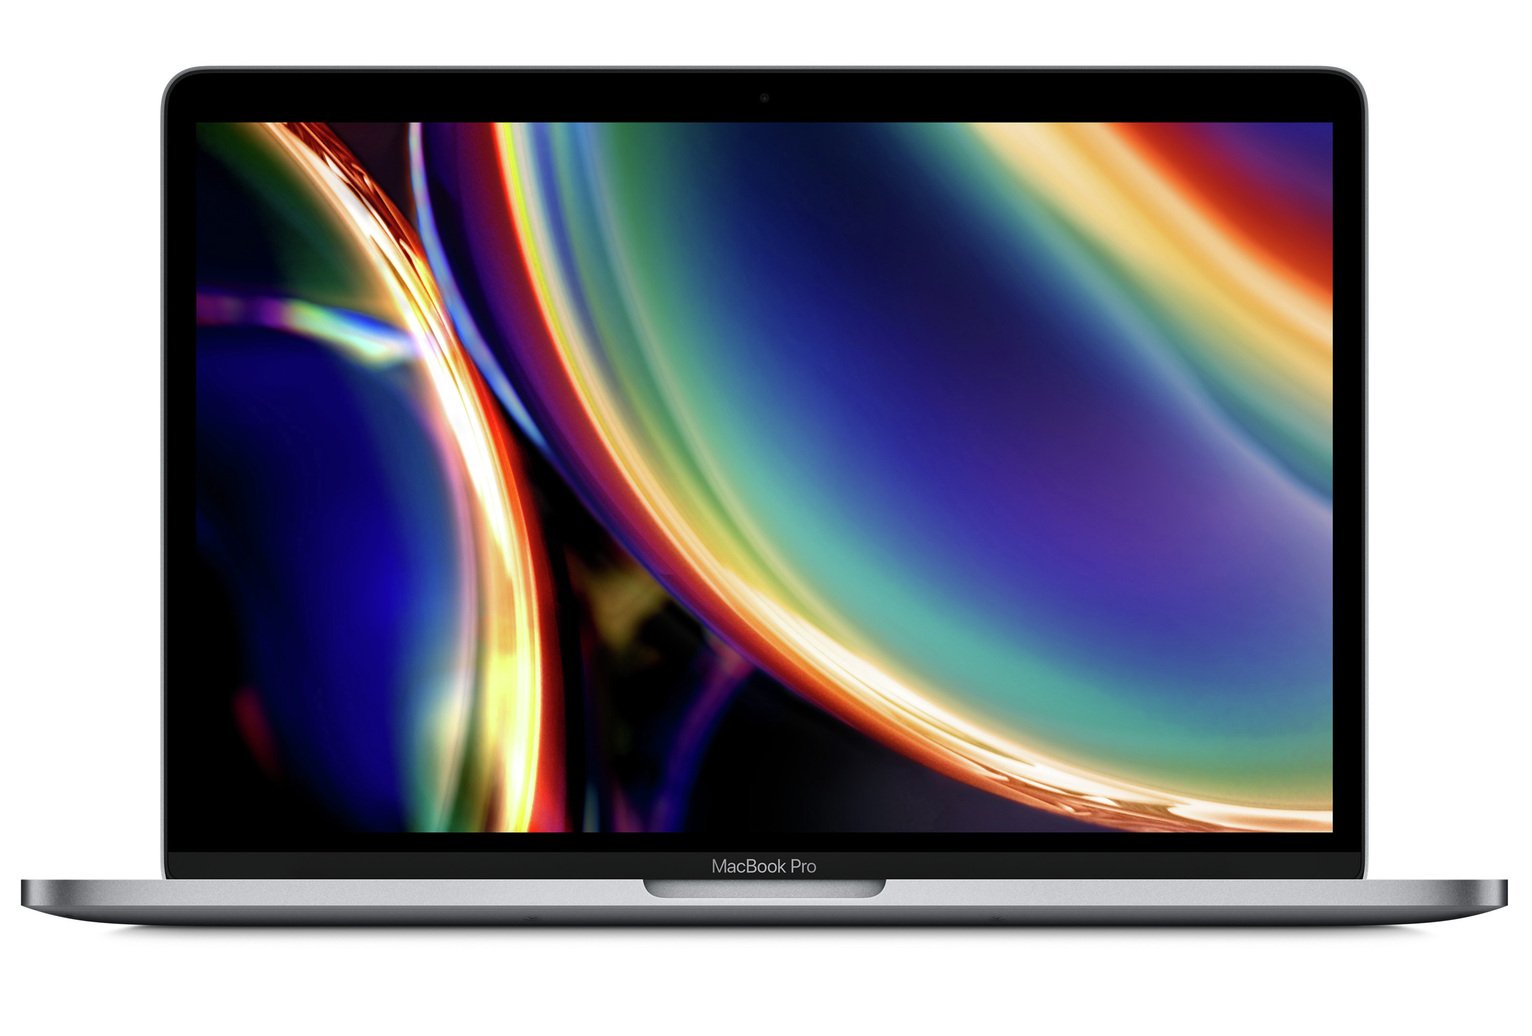 Apple MacBook Pro 2020 13in 8th Gen i5 8GB 256GB Space Grey